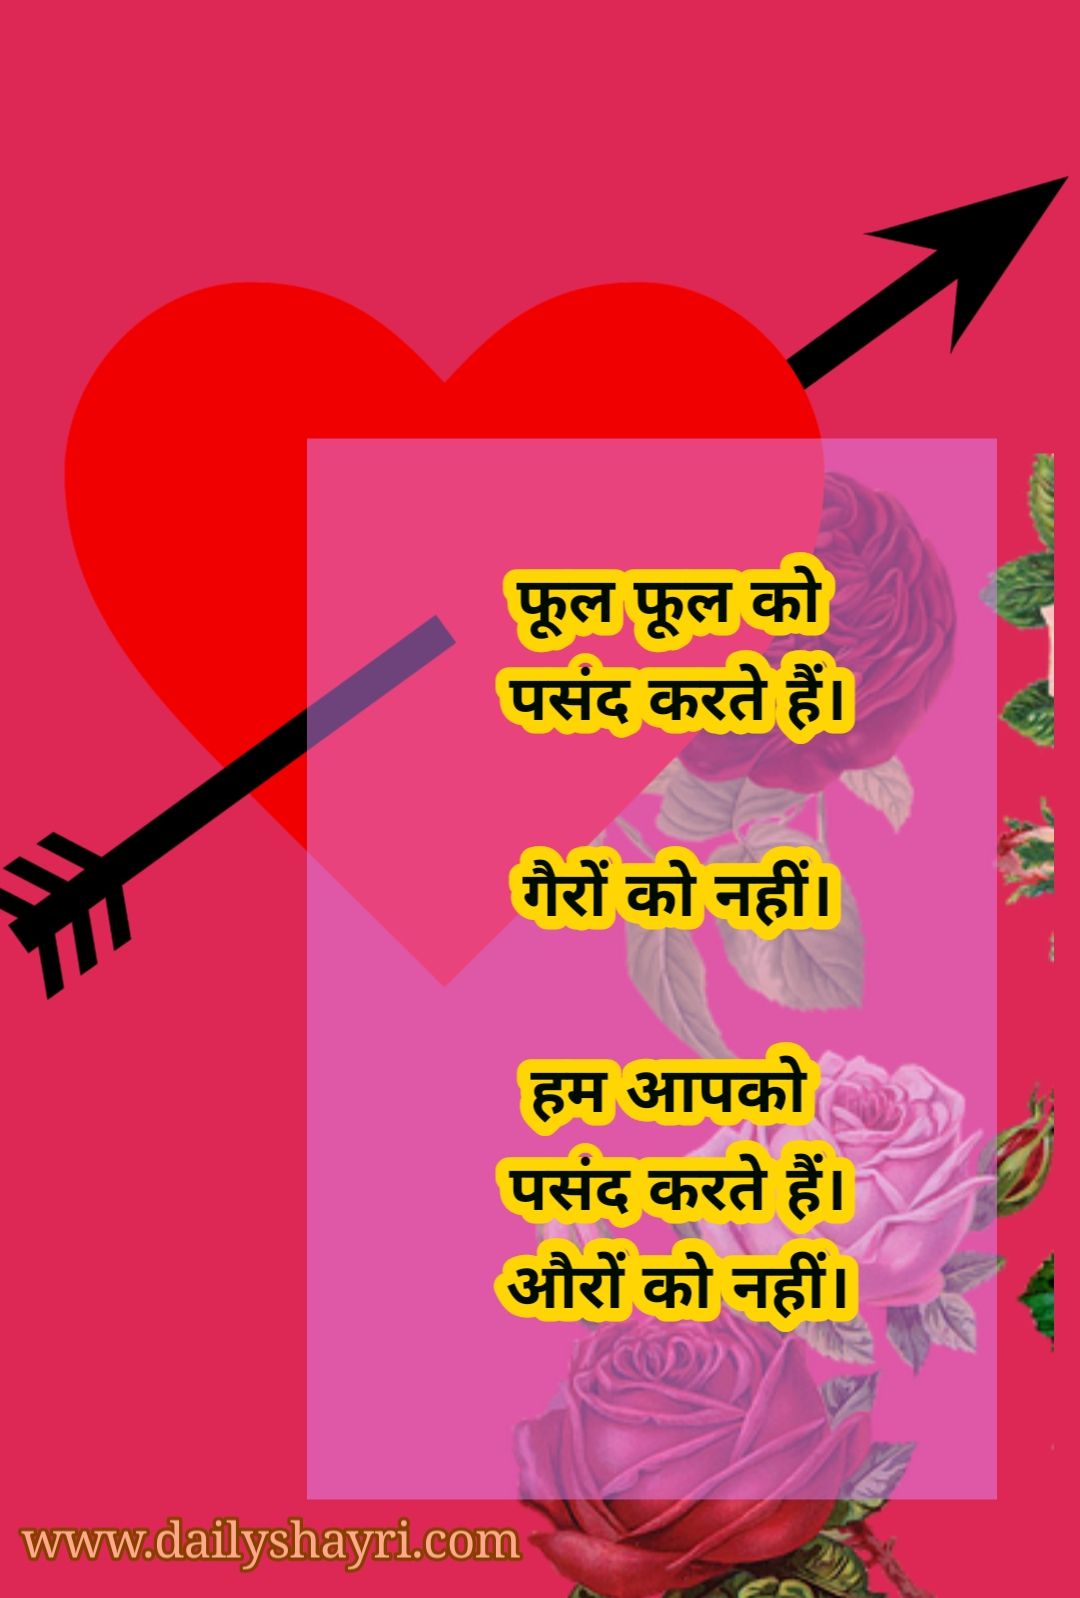 Hindi Romantic Shayari Poetry Images Hindi Shayari Love Shayari